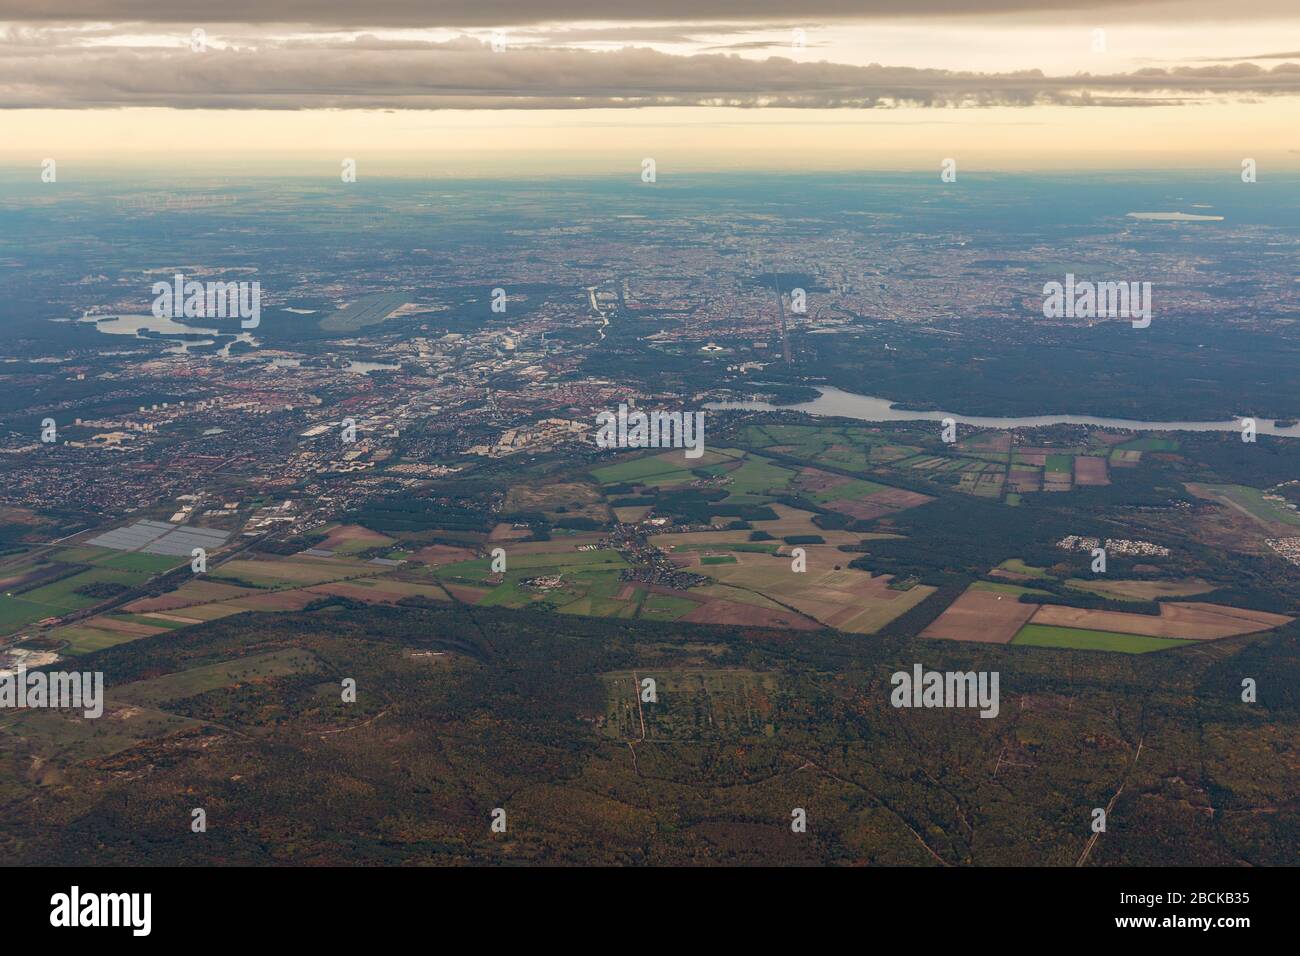 Aerial landscape view over Havel river, Tegel airport, Berlin suburb Wilhelmstadt, Amalienhof, Spandau and Pichelsdorf in Germany. Stock Photo